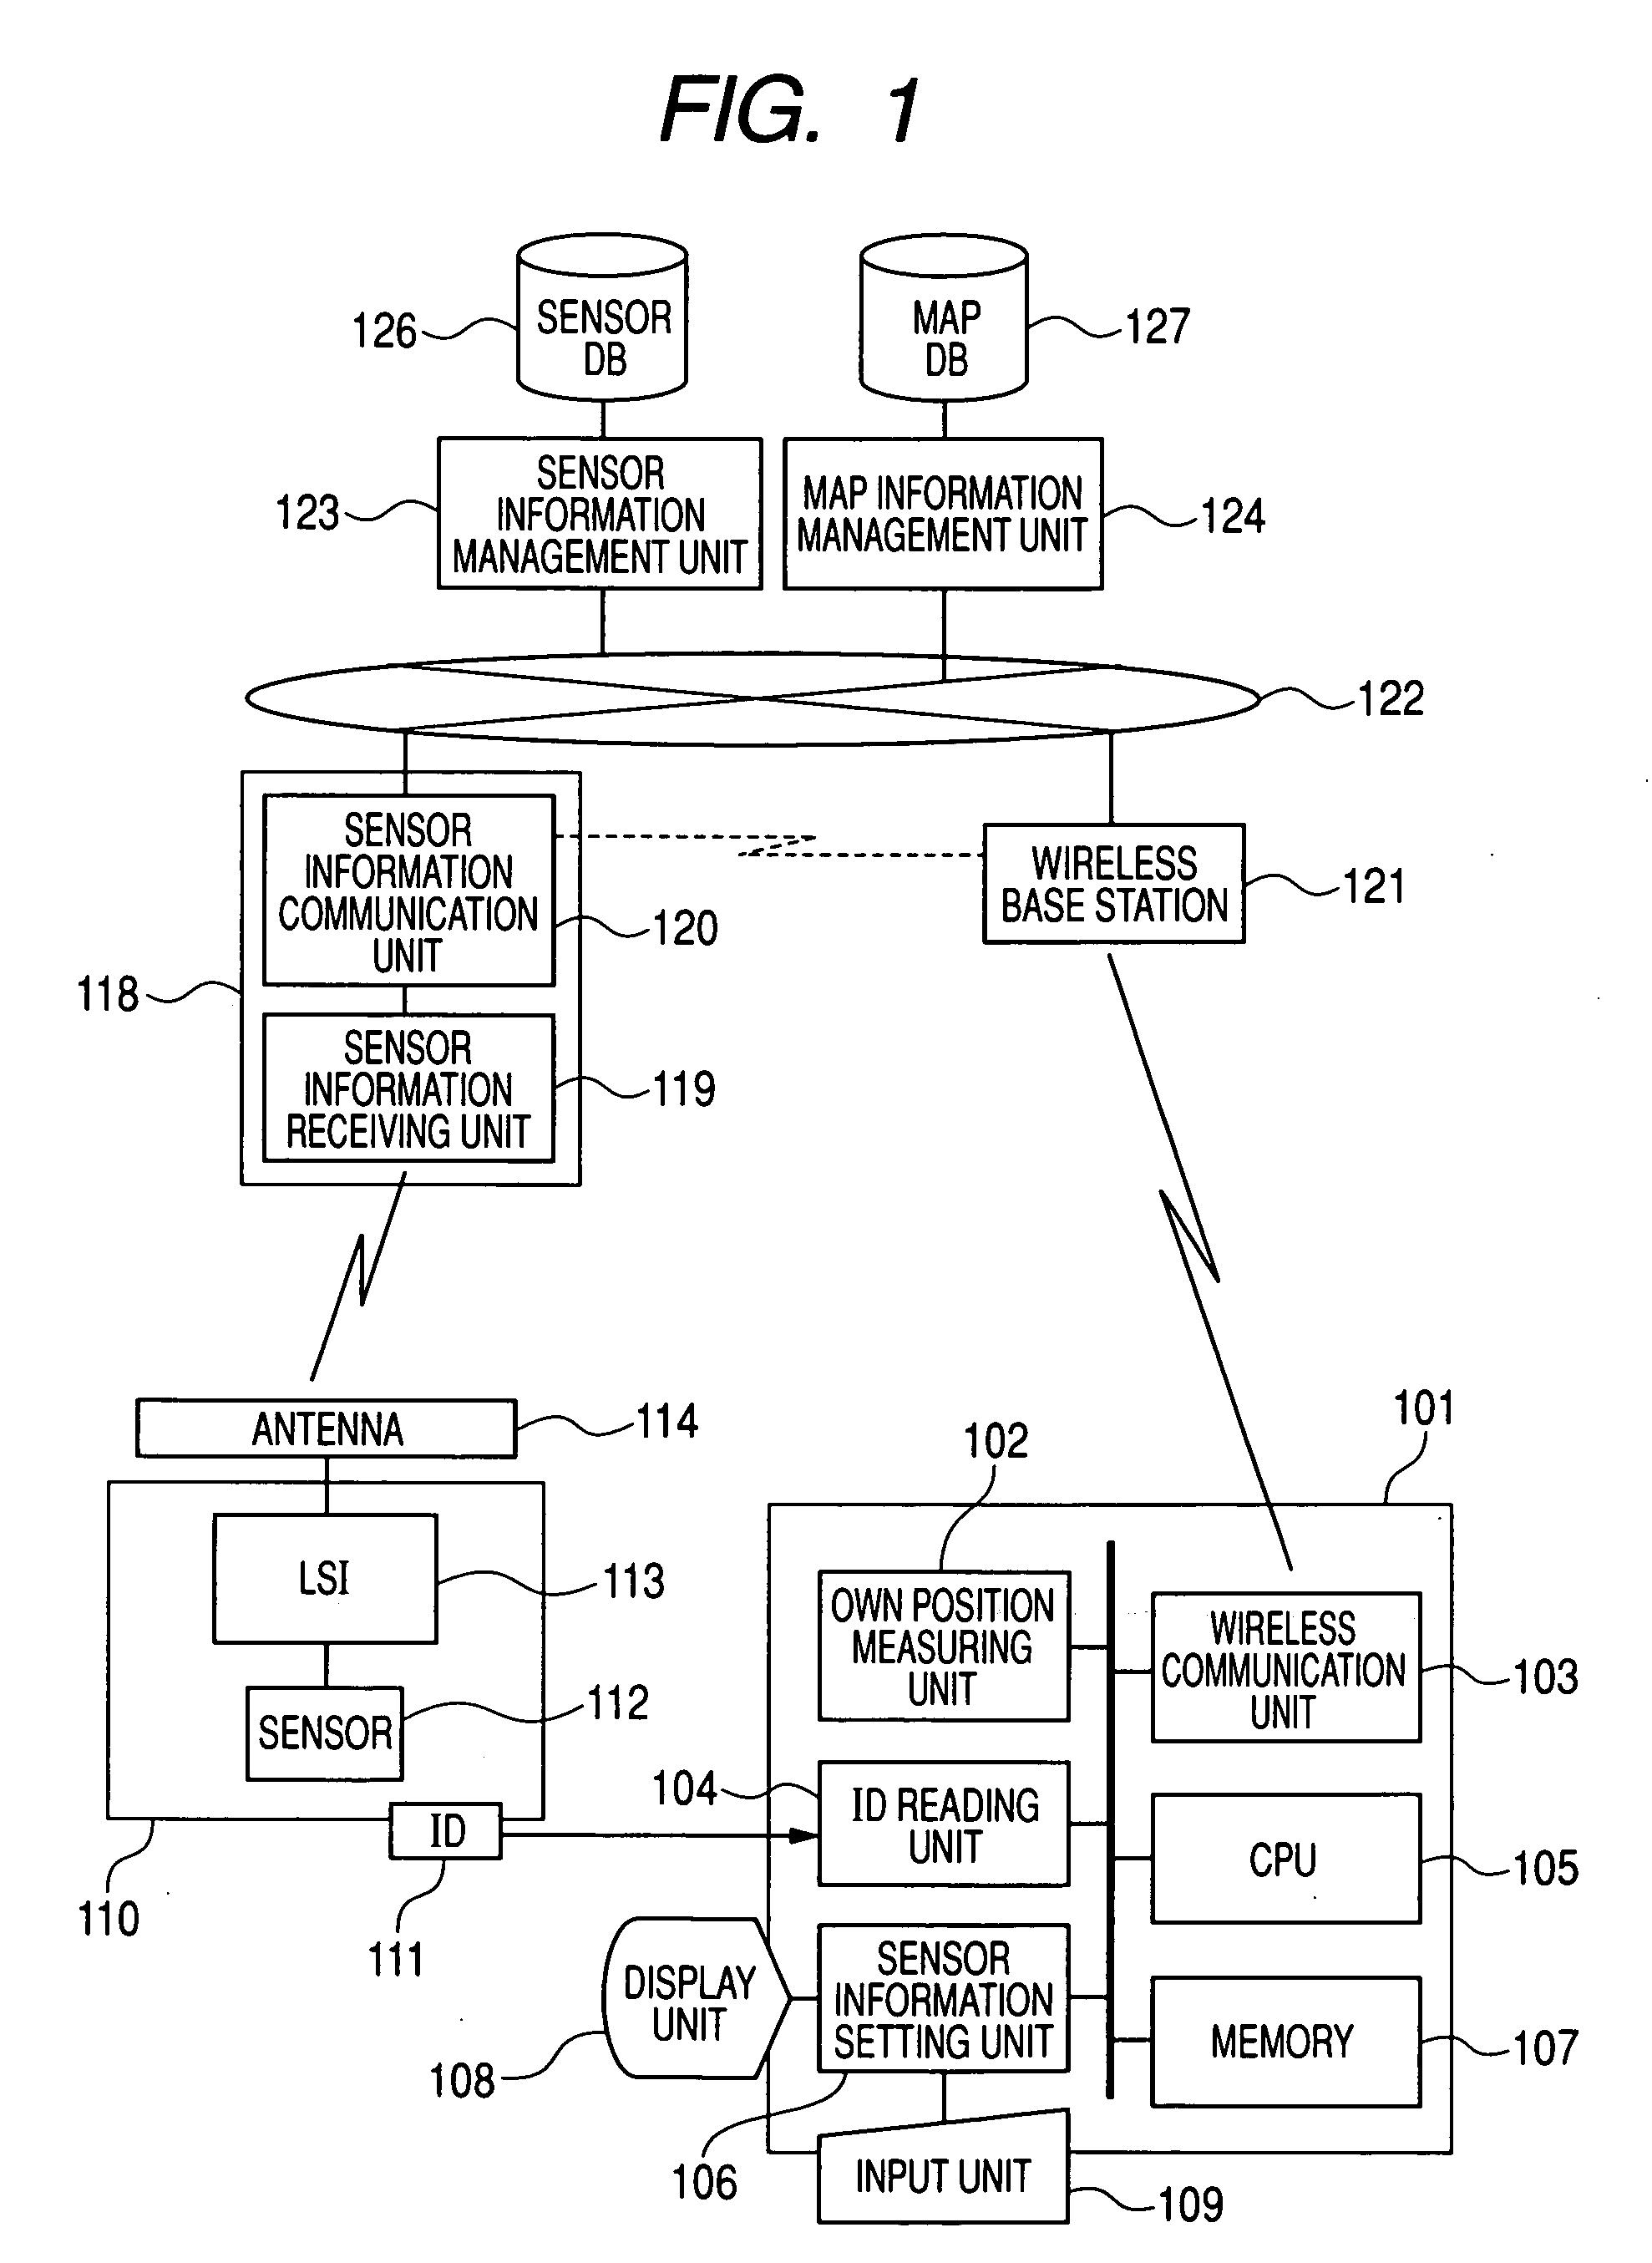 Sensor network system